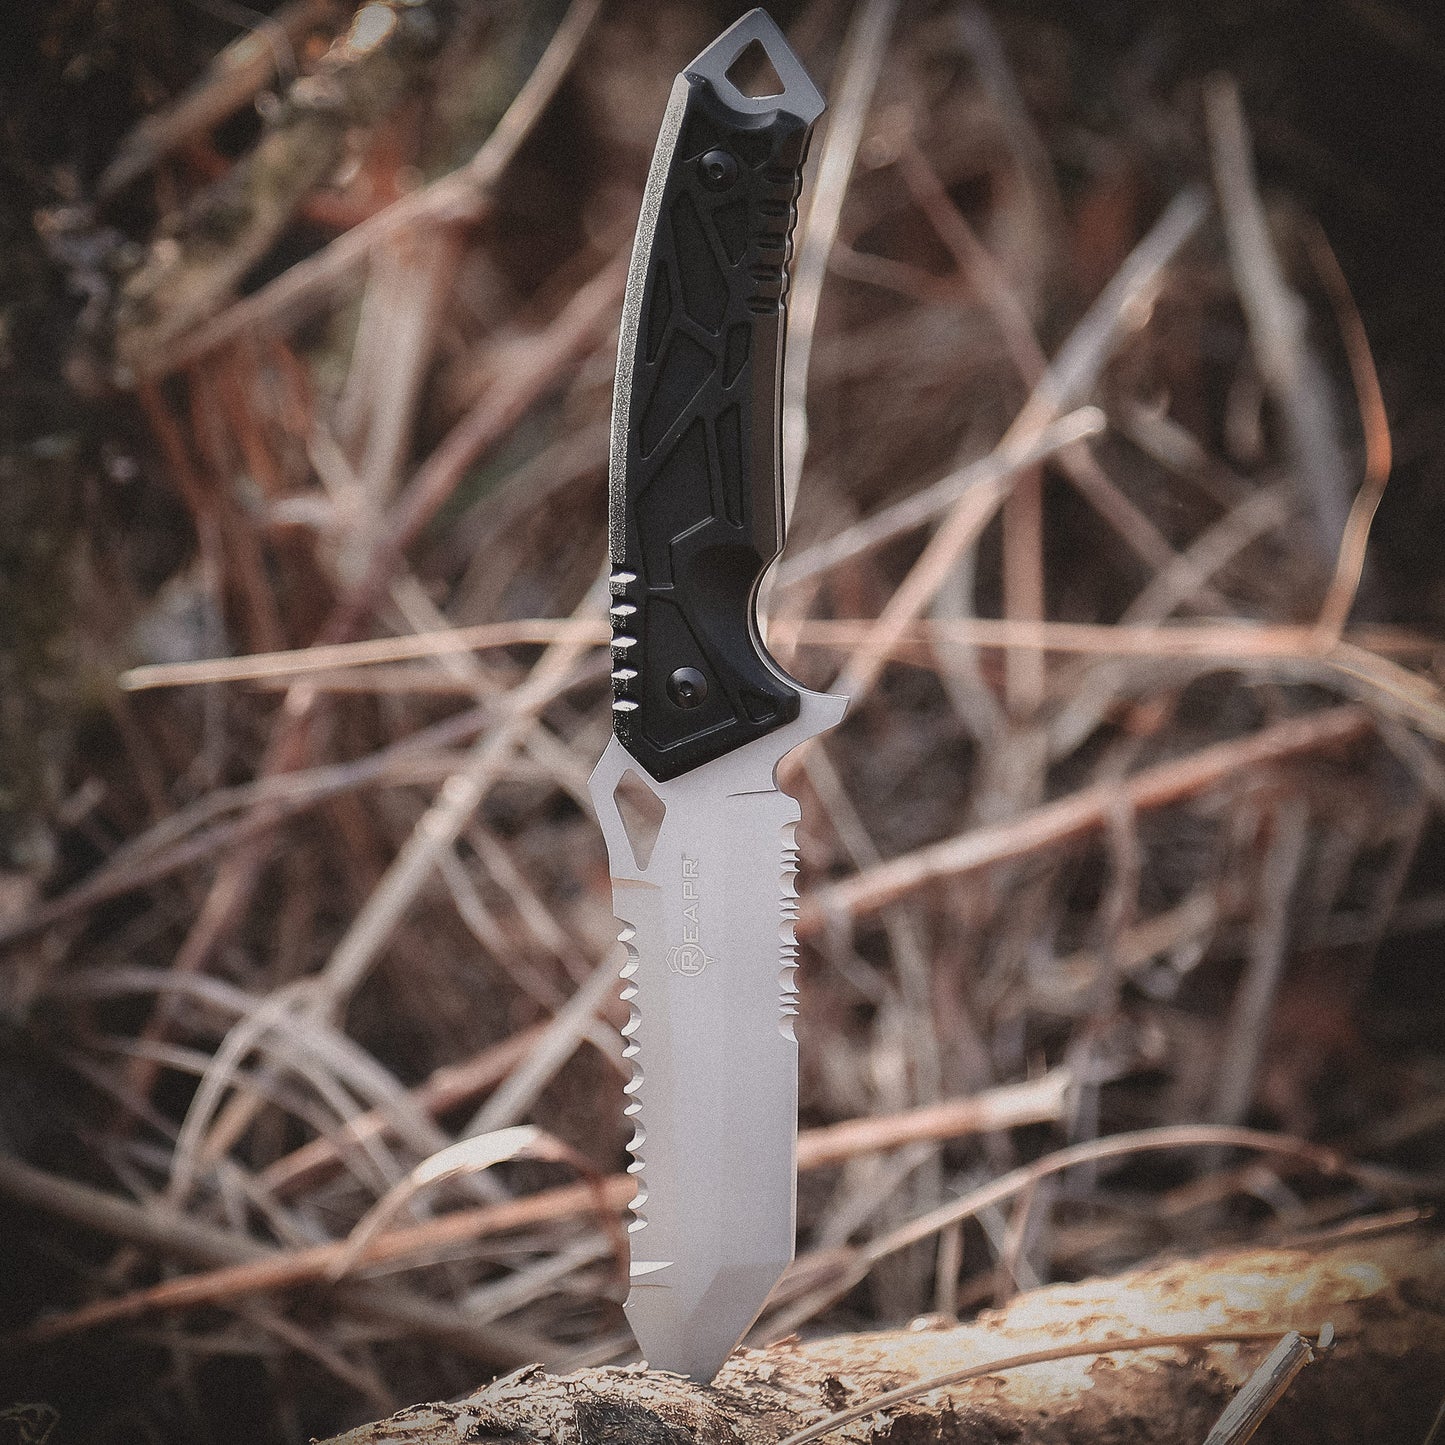 REAPR 11011 Javelin Fixed Blade Knife glass breaker and a sawed-back dual edge serrated camping knife.